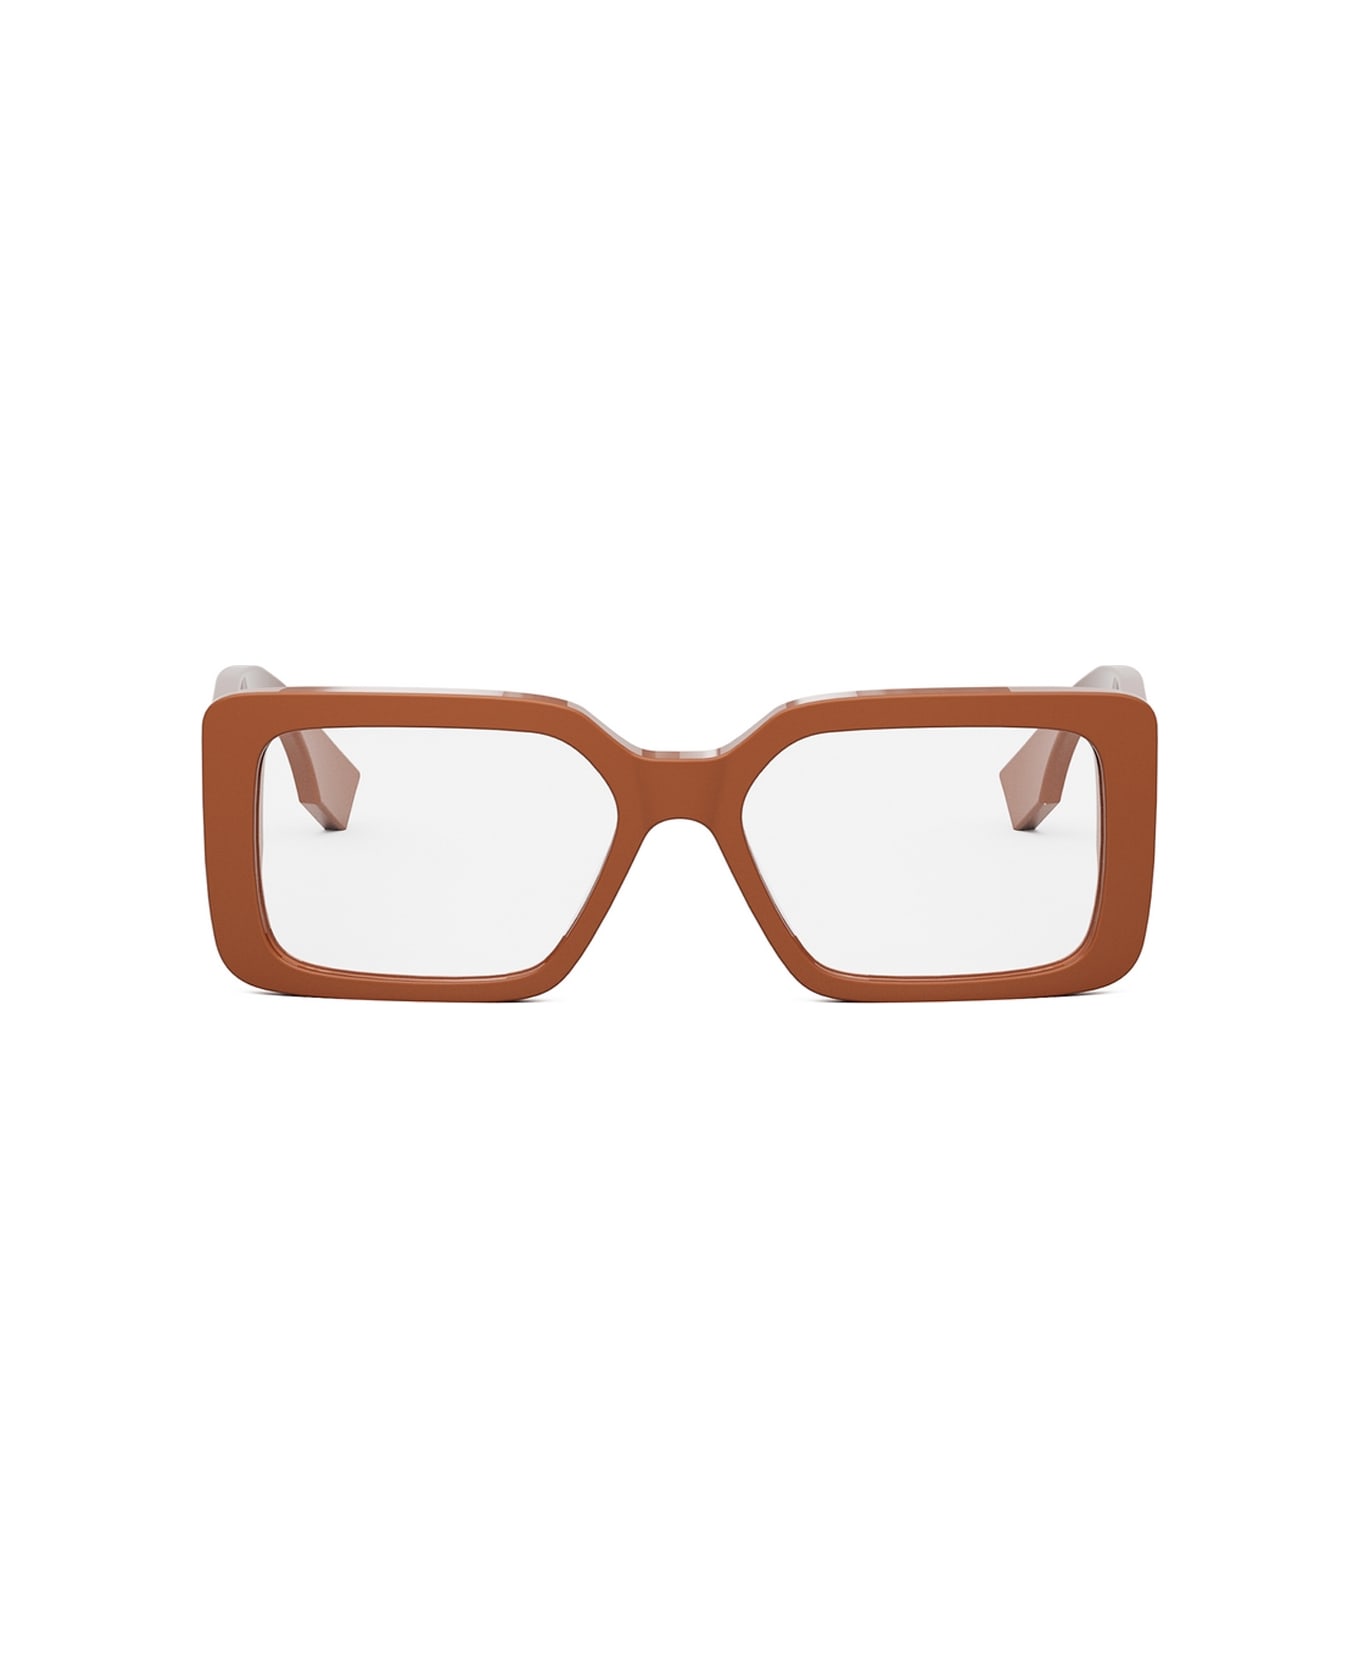 Fendi Eyewear Fe50072i 050 Glasses - 050